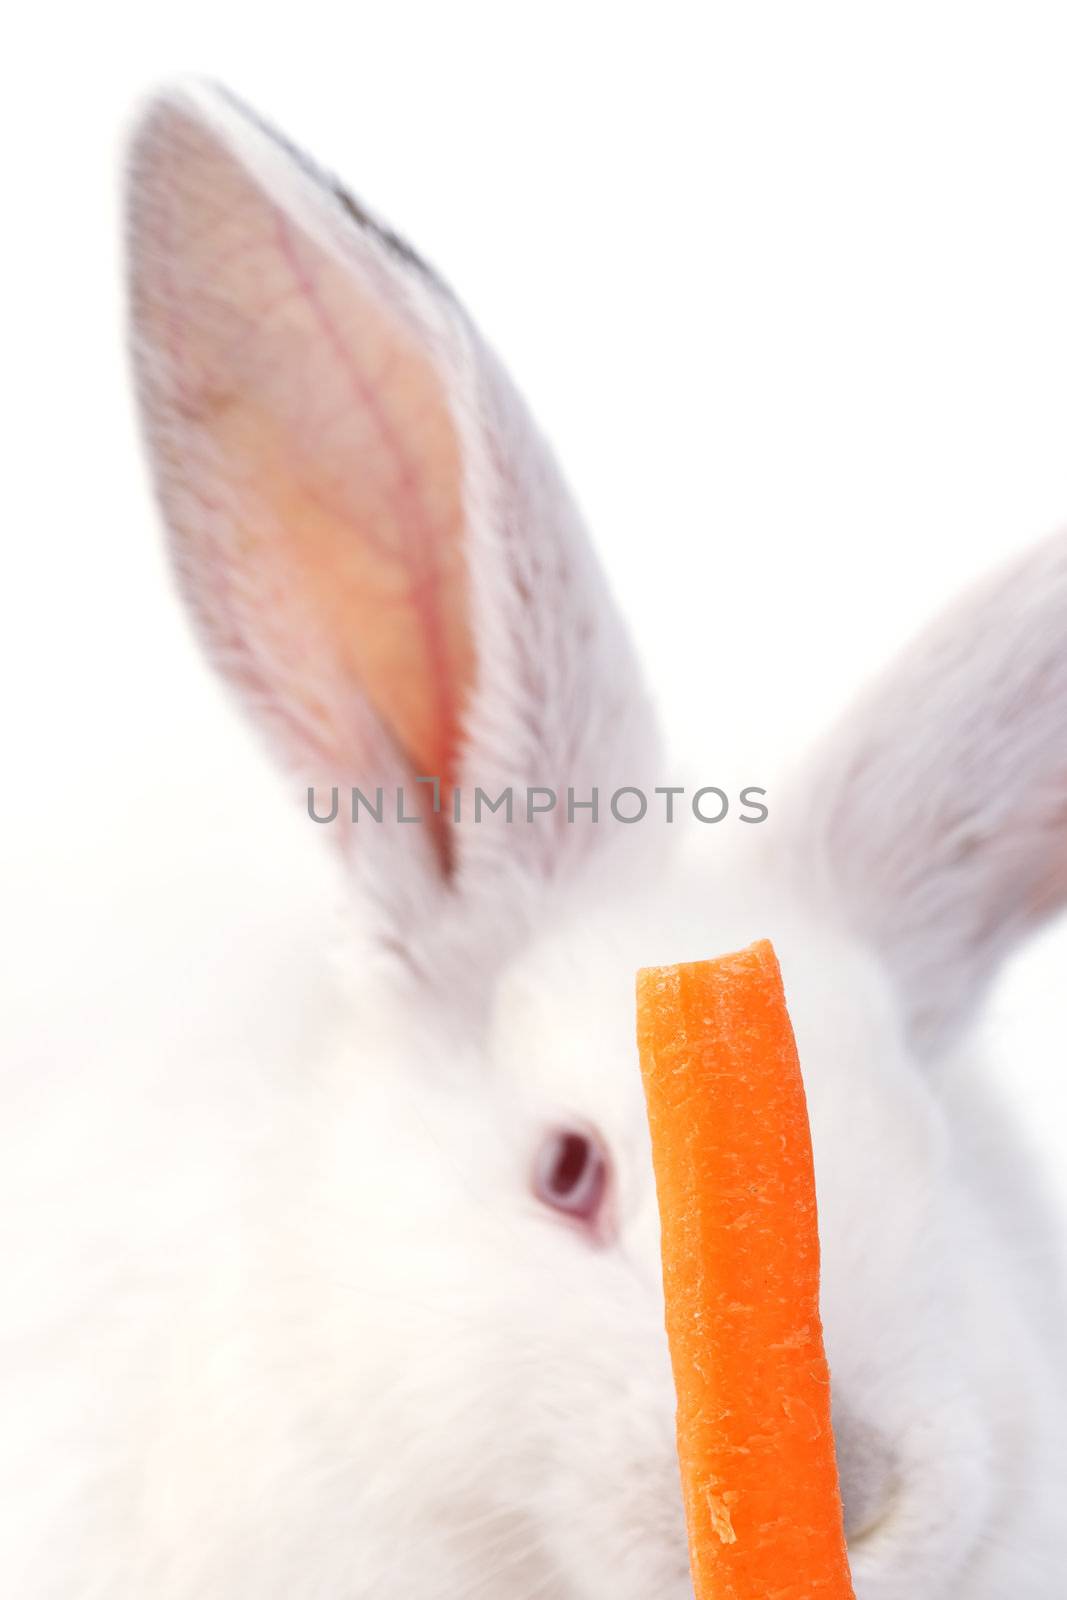 rabbit by kokimk